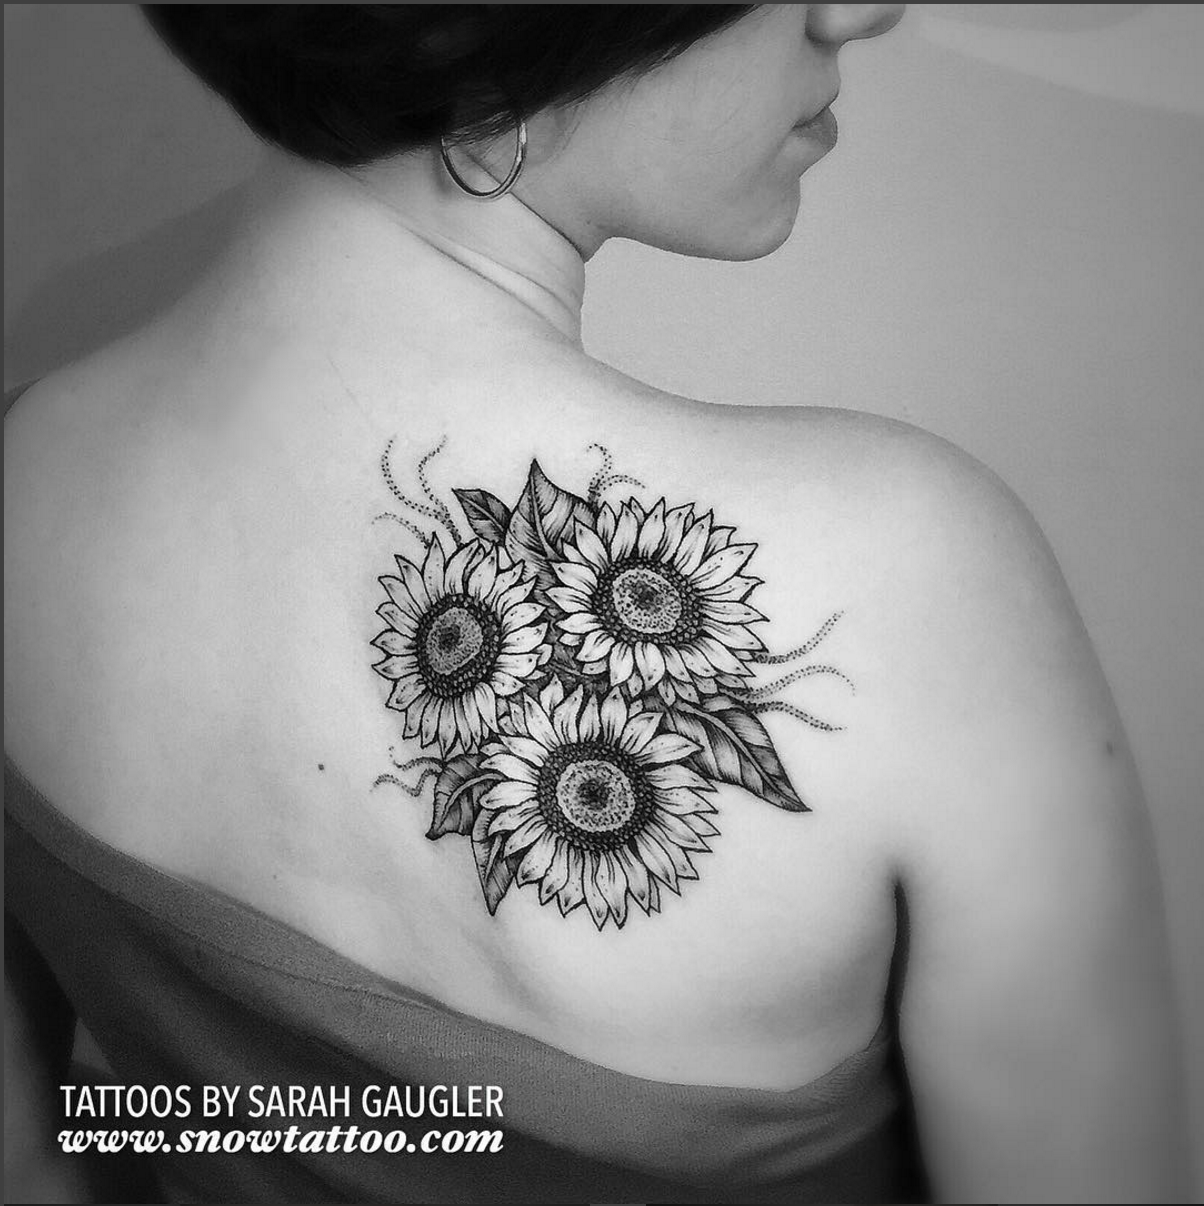 Cusotm+Sarahgaugler+Sunflower+Sunflowers+Sunflowerstattoo+Tattoo+Line+Art+Original+Flash+Tattoo+by+Sarah+Gaugler+at+Snow+Tattoo+New+York+NYC.jpg